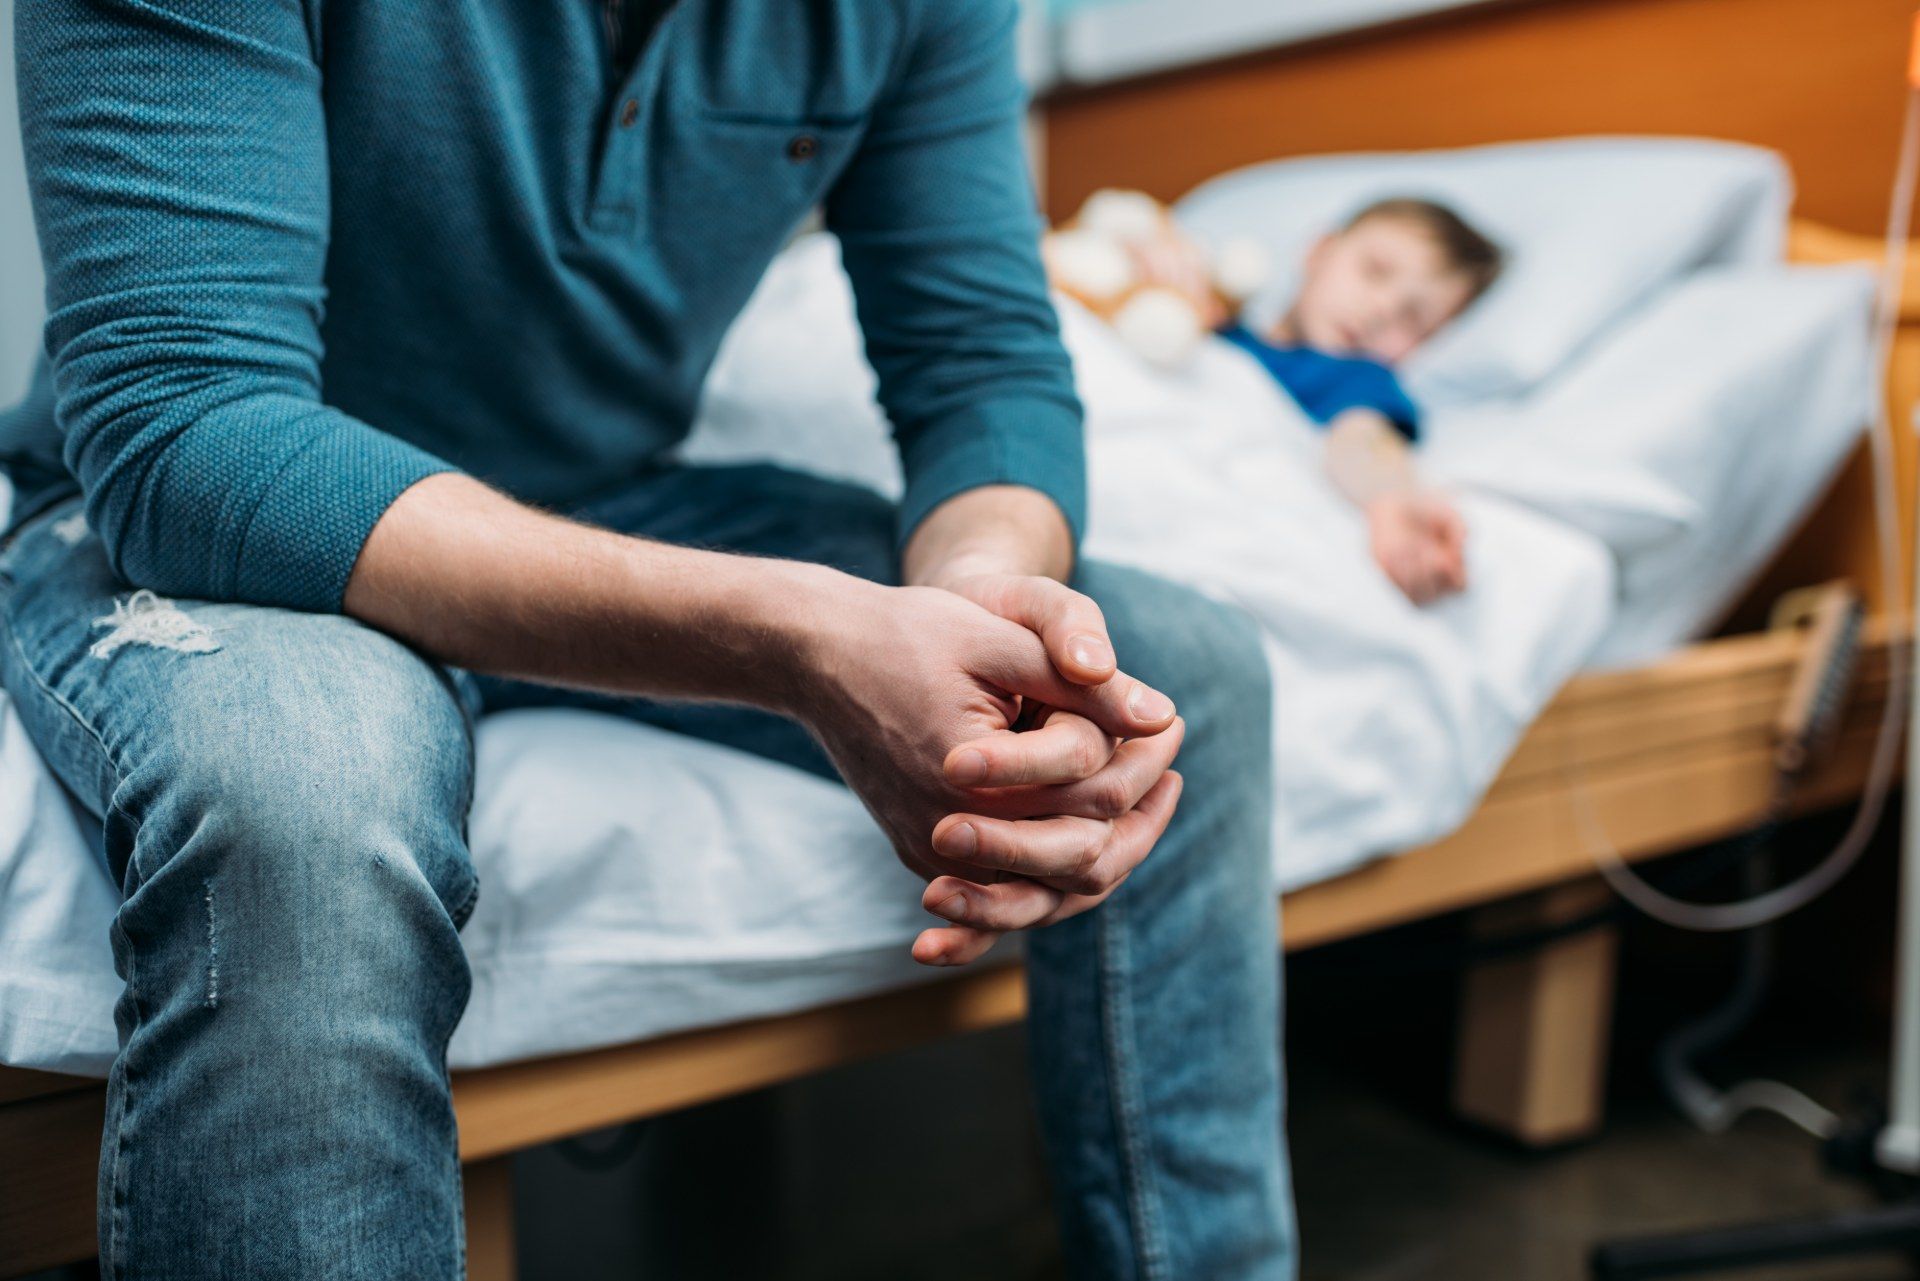 A man sits on a hospital bed where a little boy lies - coronavirus outbreak